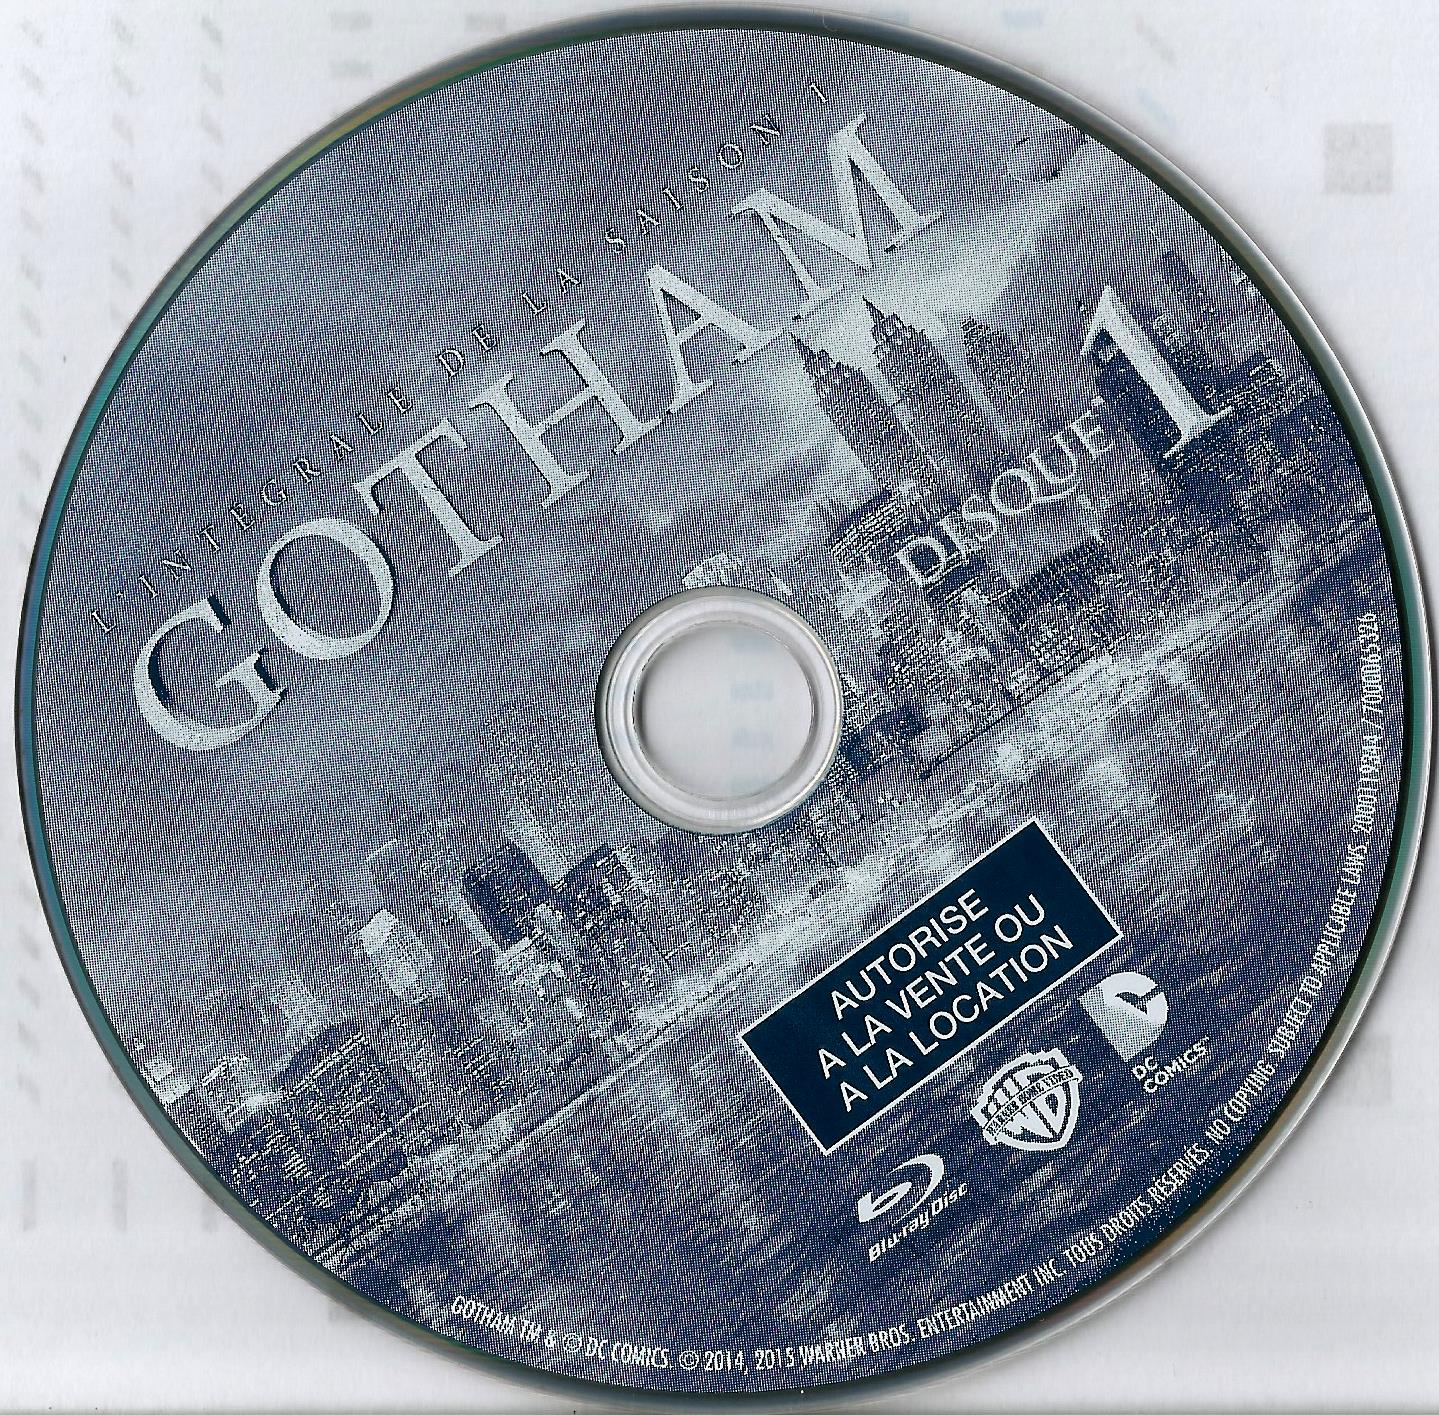 Gotham saison 1 DISC 1 (BLU-RAY)